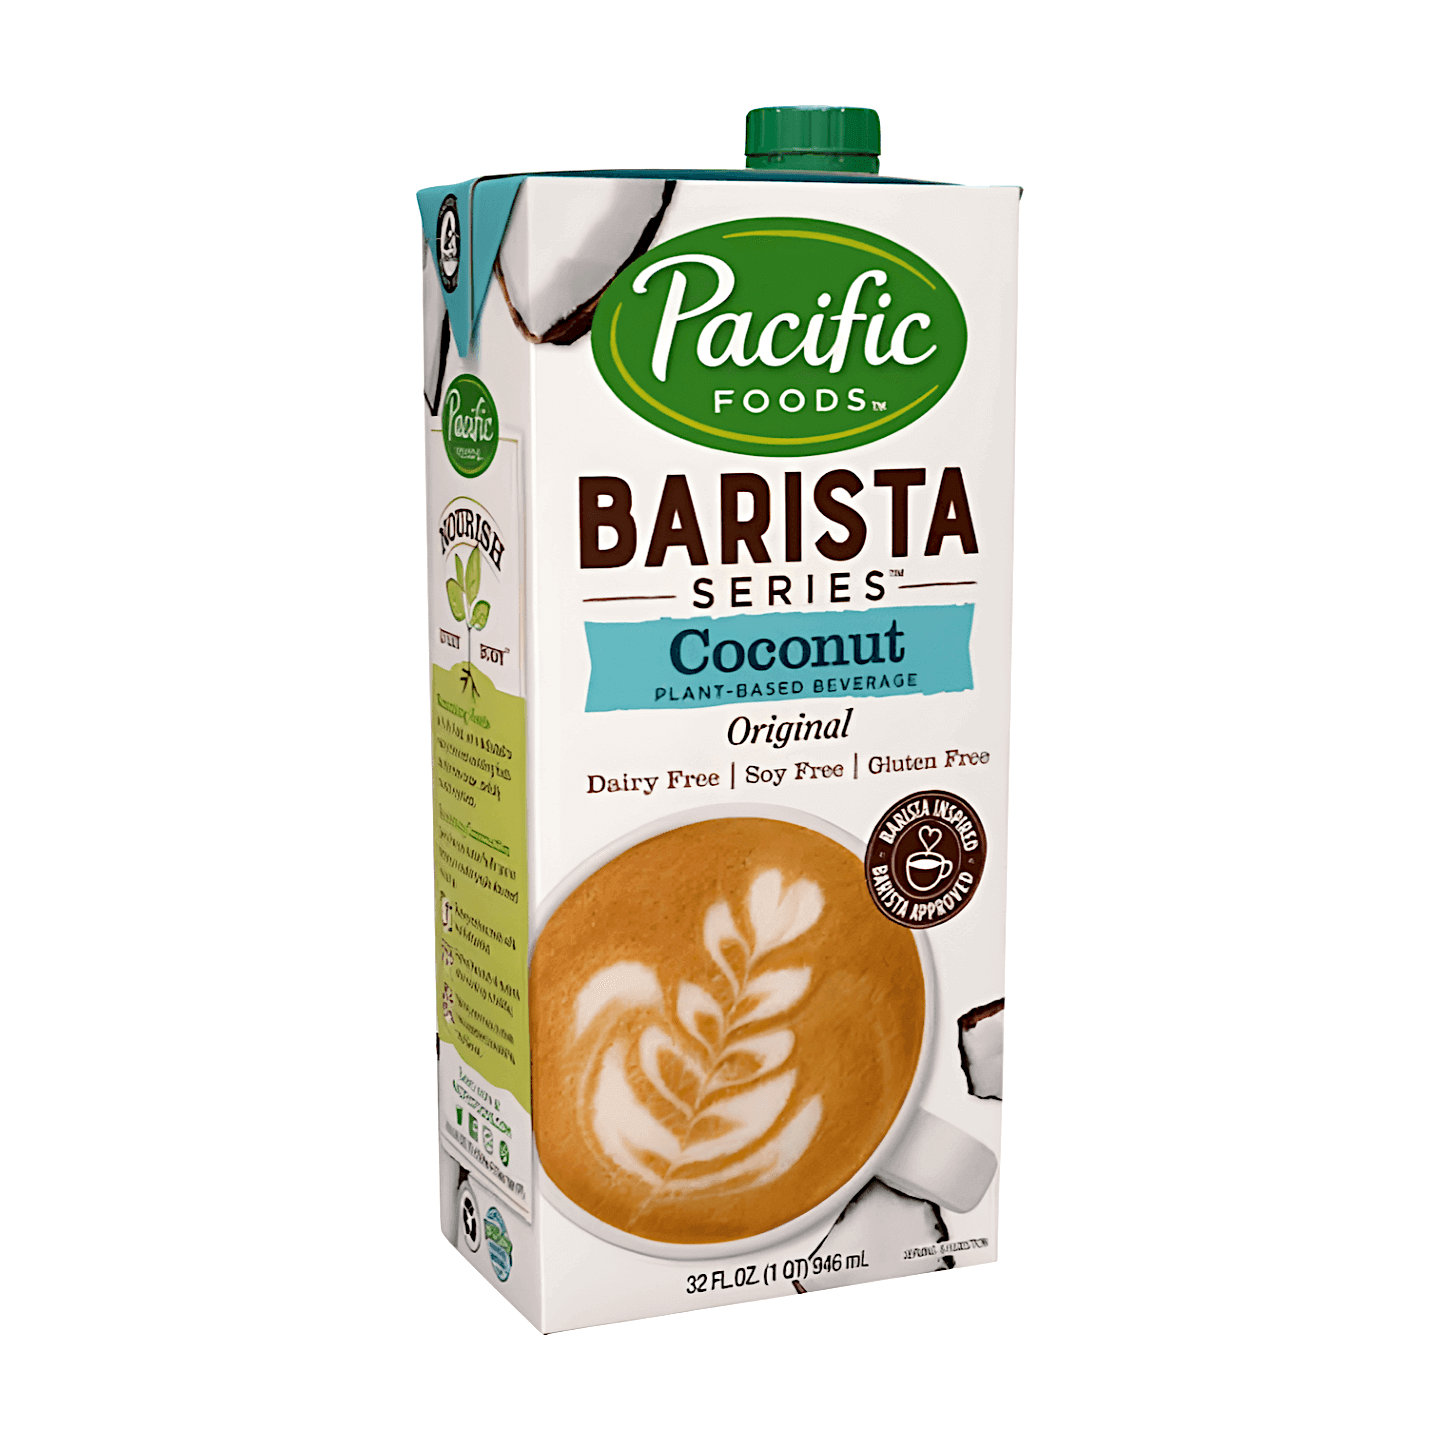 Pacific Foods Barista Series Coconut Original